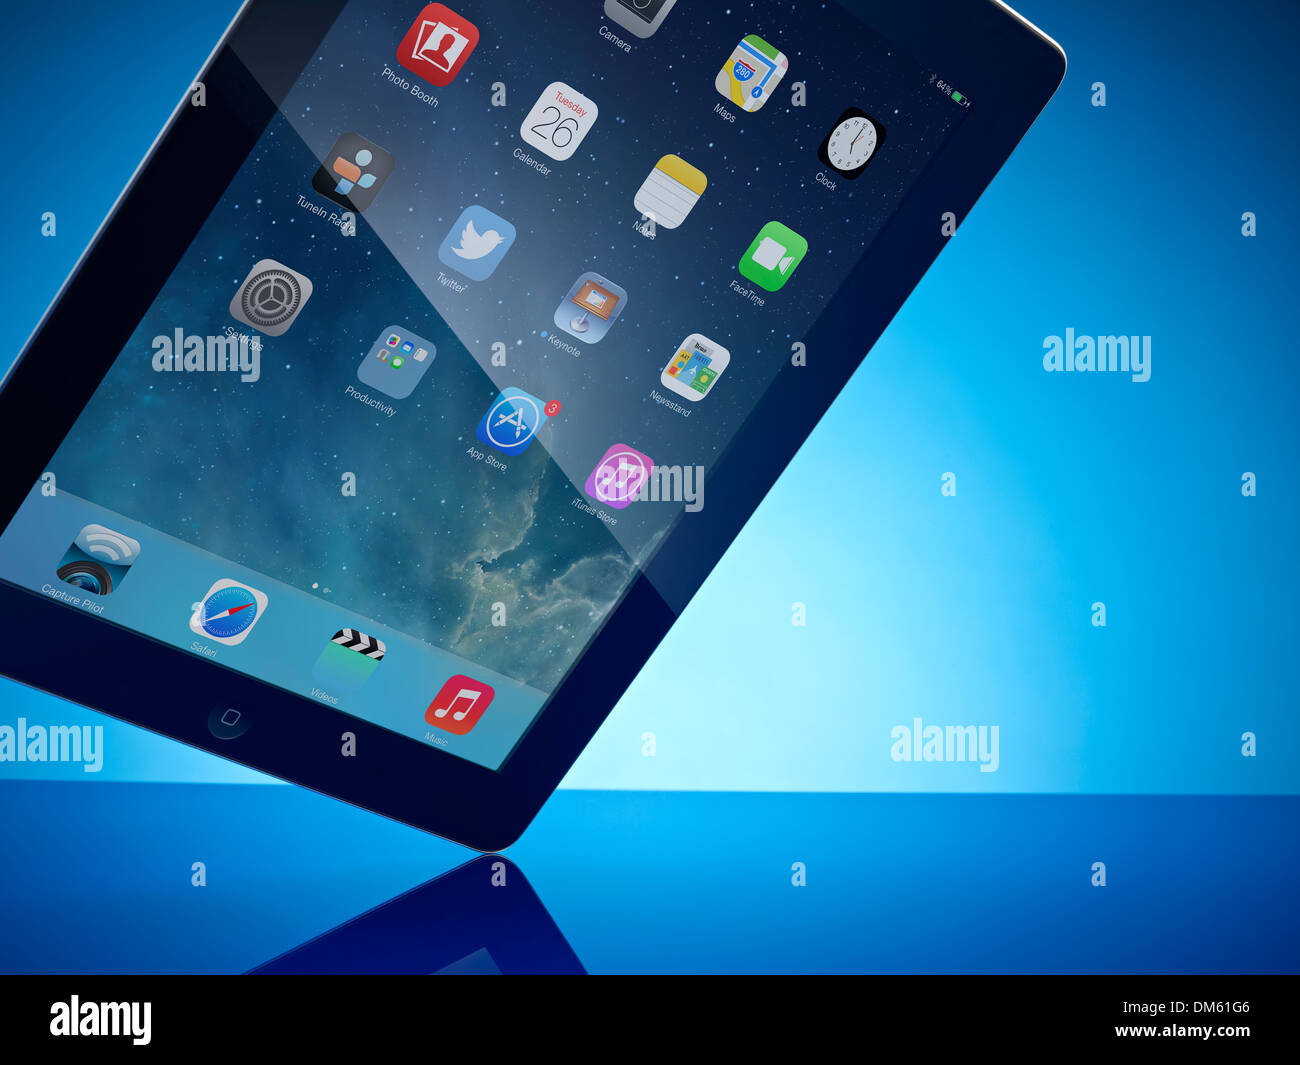 Apple Ipad 2 on a blue background Stock Photo